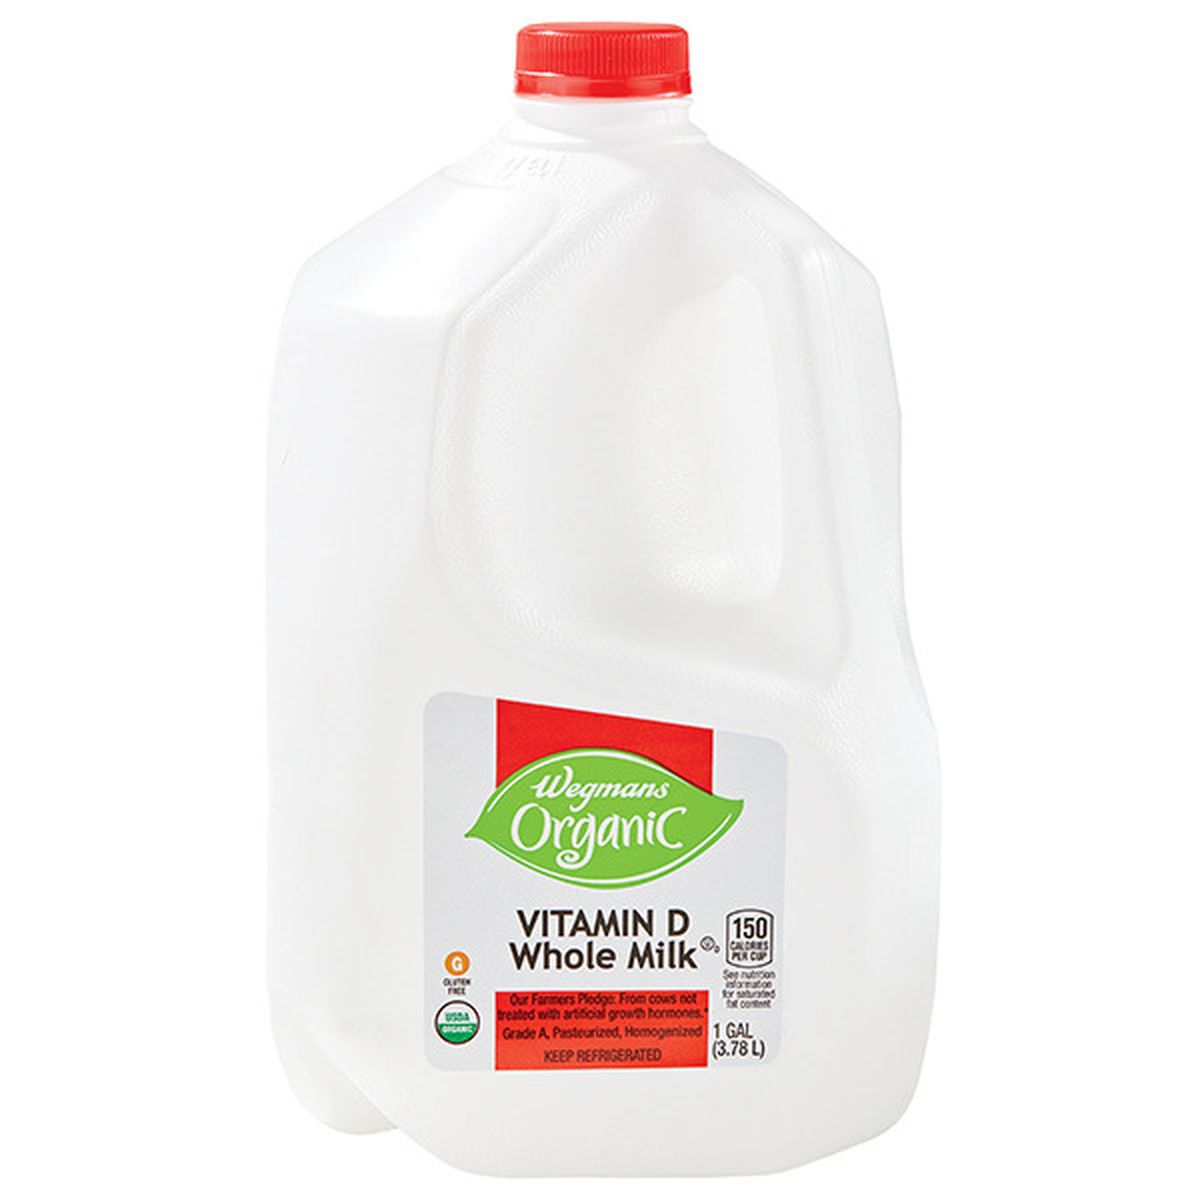 Calories in Wegmans Organic Vitamin D Whole Milk